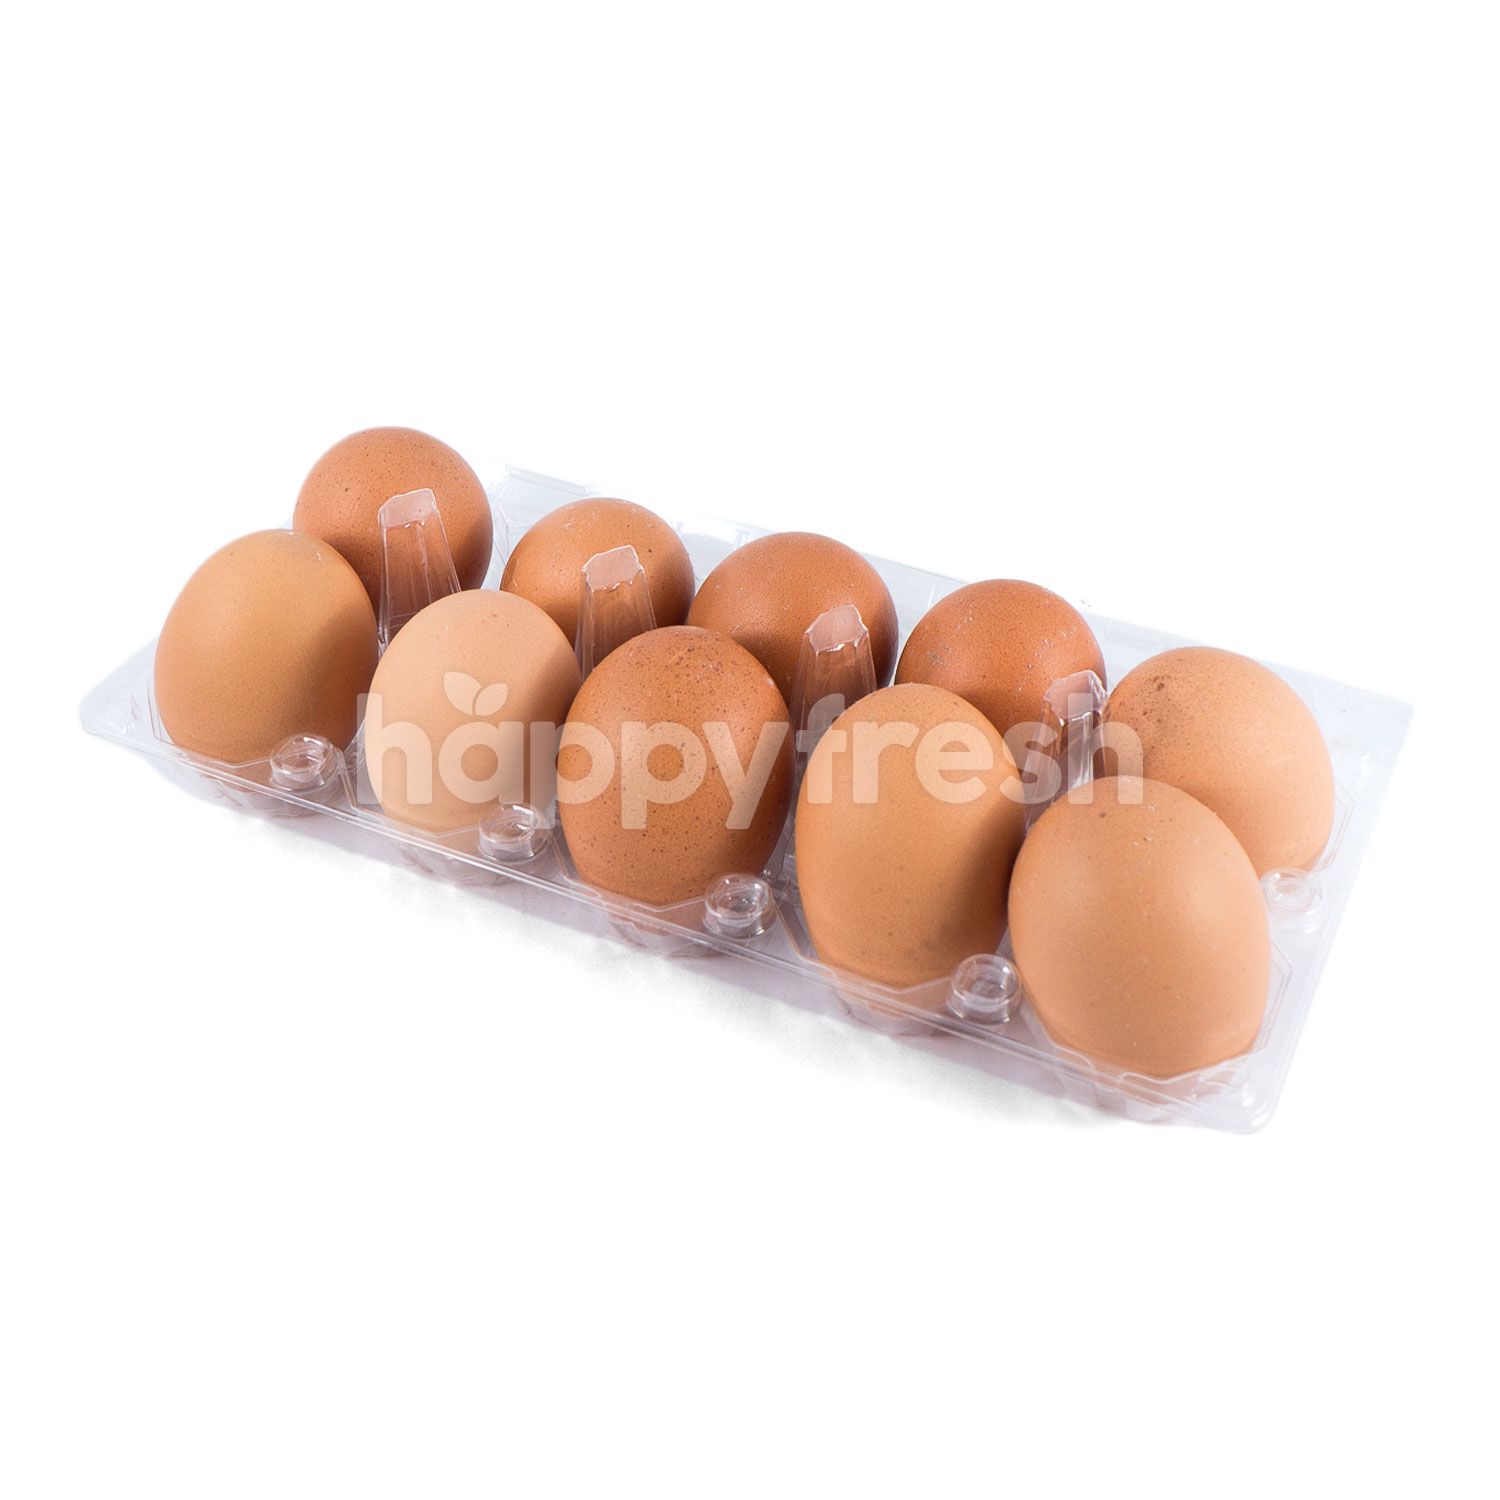 Jual Telur Prima Chicken Egg di Lotte Mart - HappyFresh | HappyFresh